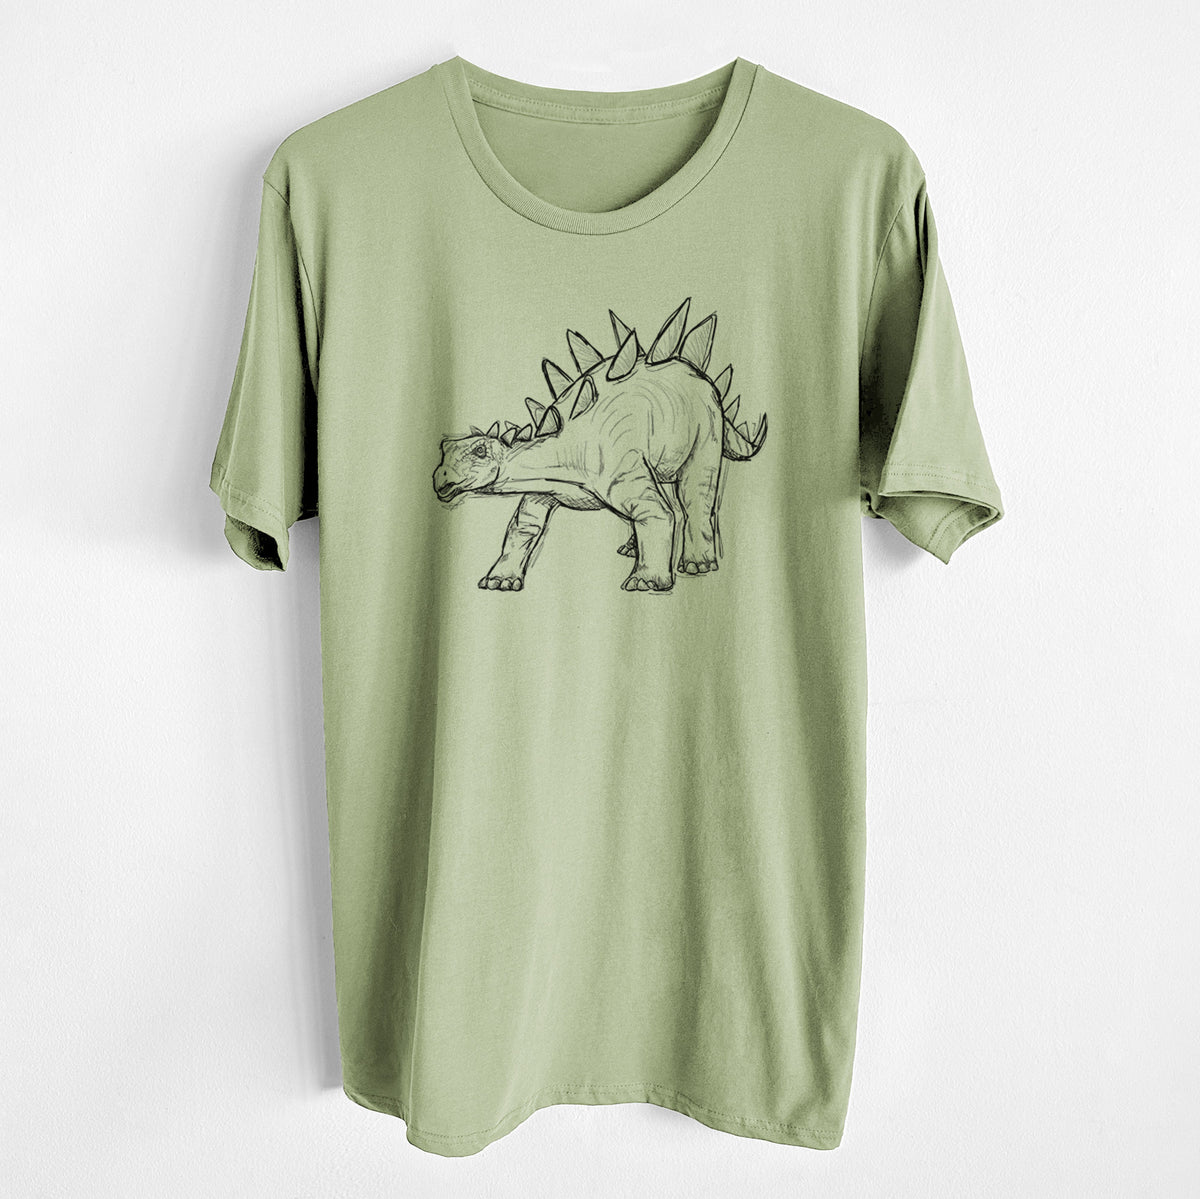 Stegosaurus Stenops - Unisex Crewneck - Made in USA - 100% Organic Cotton